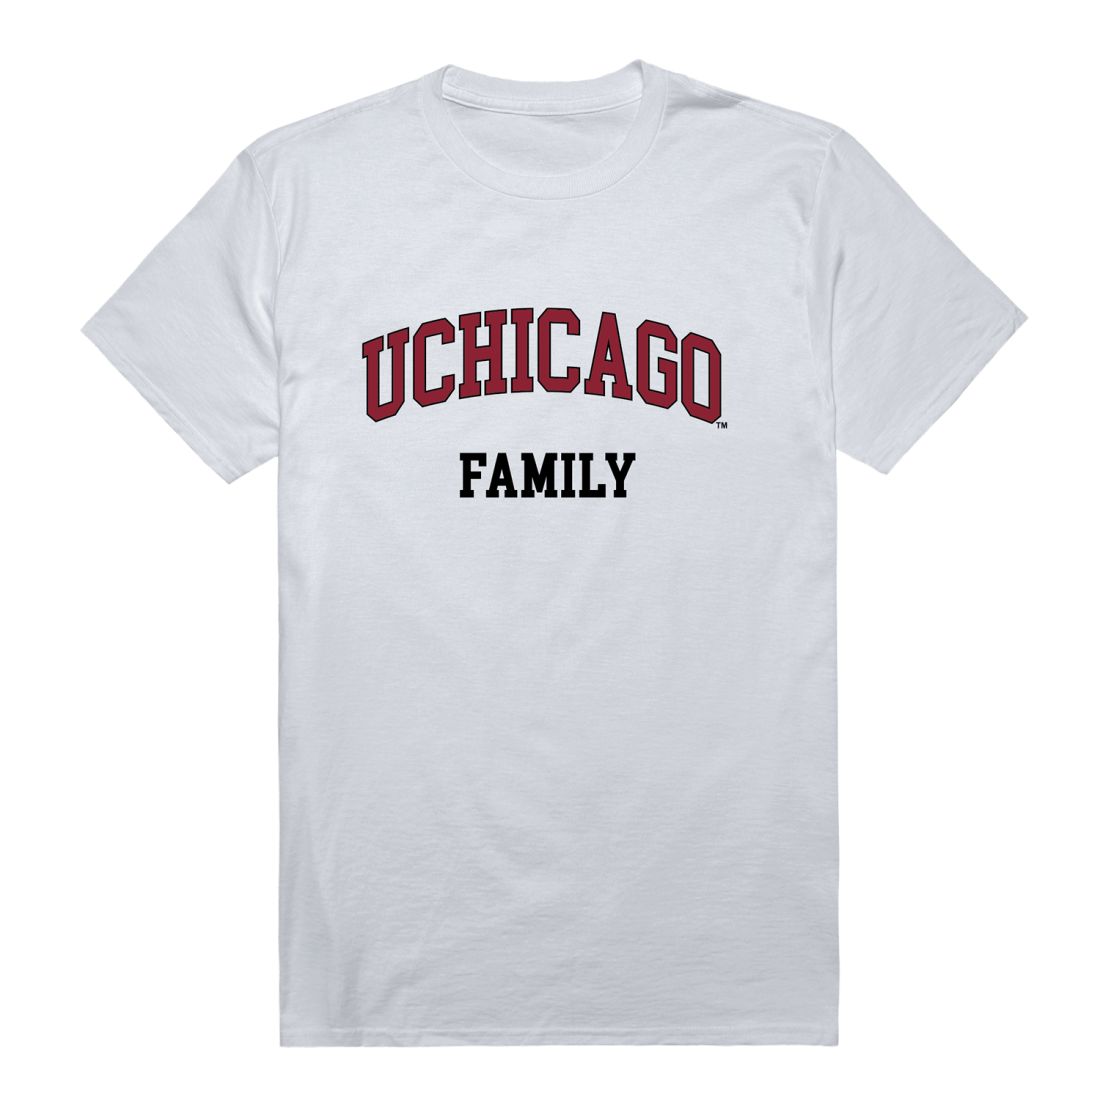 University of Chicago Maroons Family T-Shirt